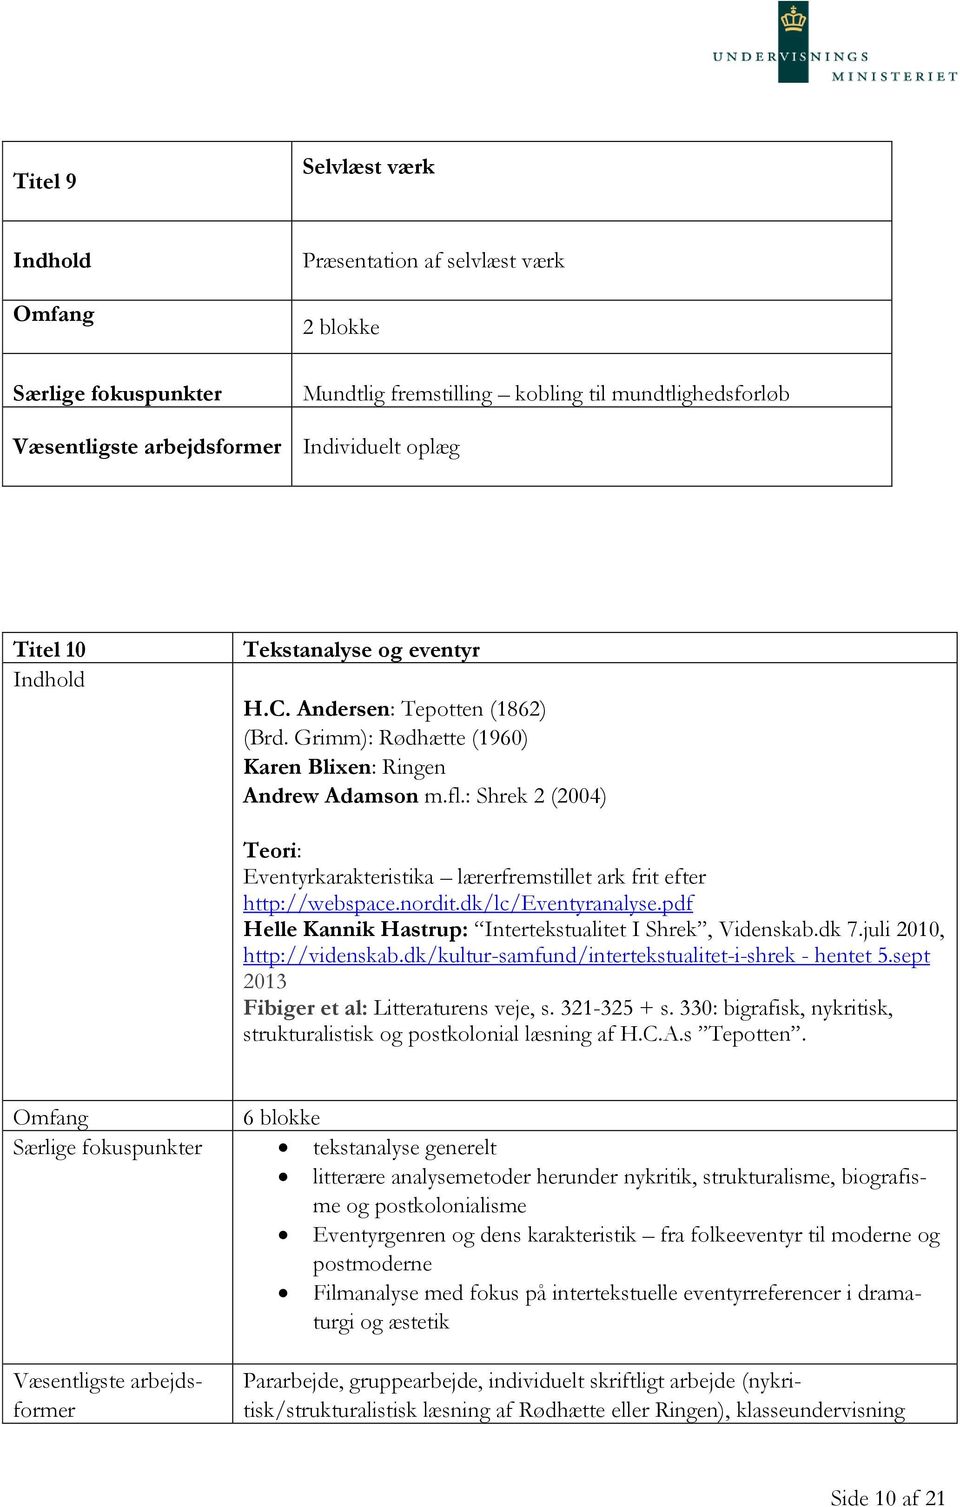 dk/lc/eventyranalyse.pdf Helle Kannik Hastrup: Intertekstualitet I Shrek, Videnskab.dk 7.juli 2010, http://videnskab.dk/kultur-samfund/intertekstualitet-i-shrek - hentet 5.